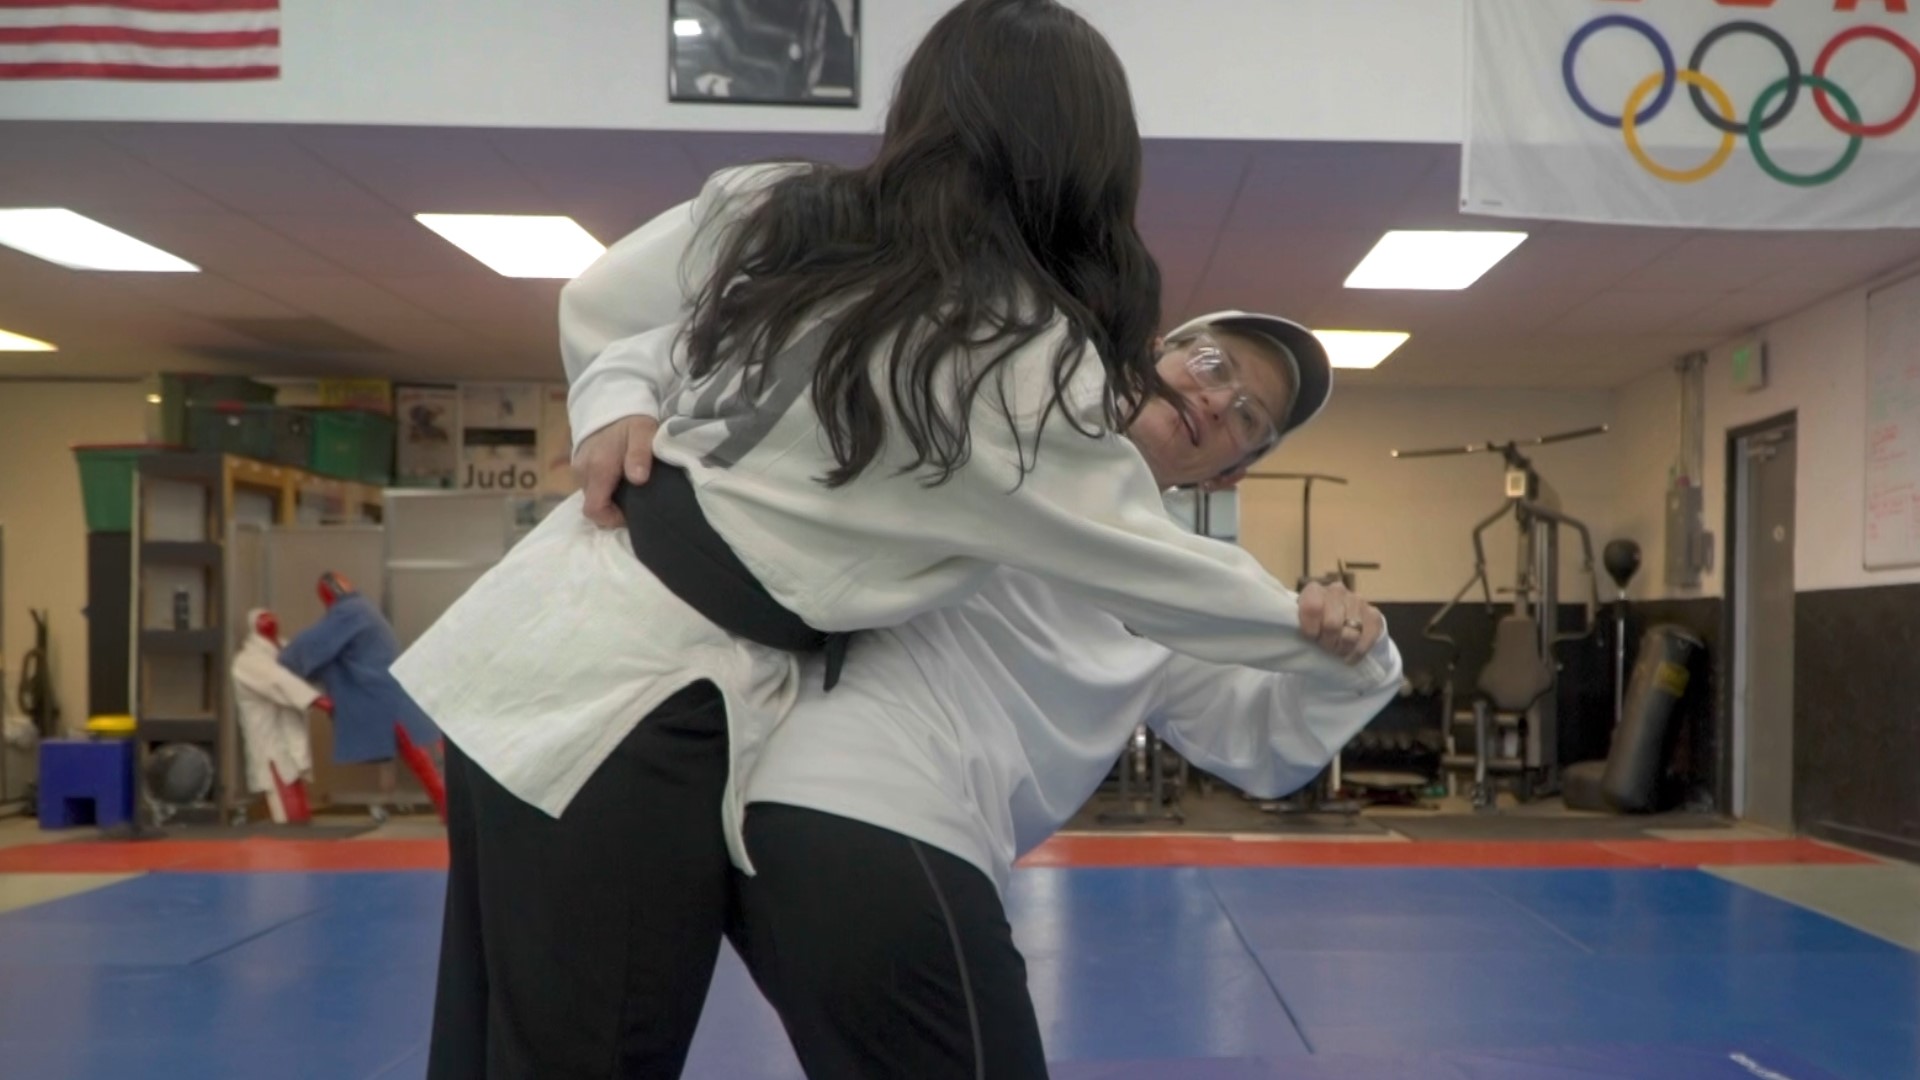 Grace Truesdale is the owner of Gracie Judo, a judo dojo in Colorado.